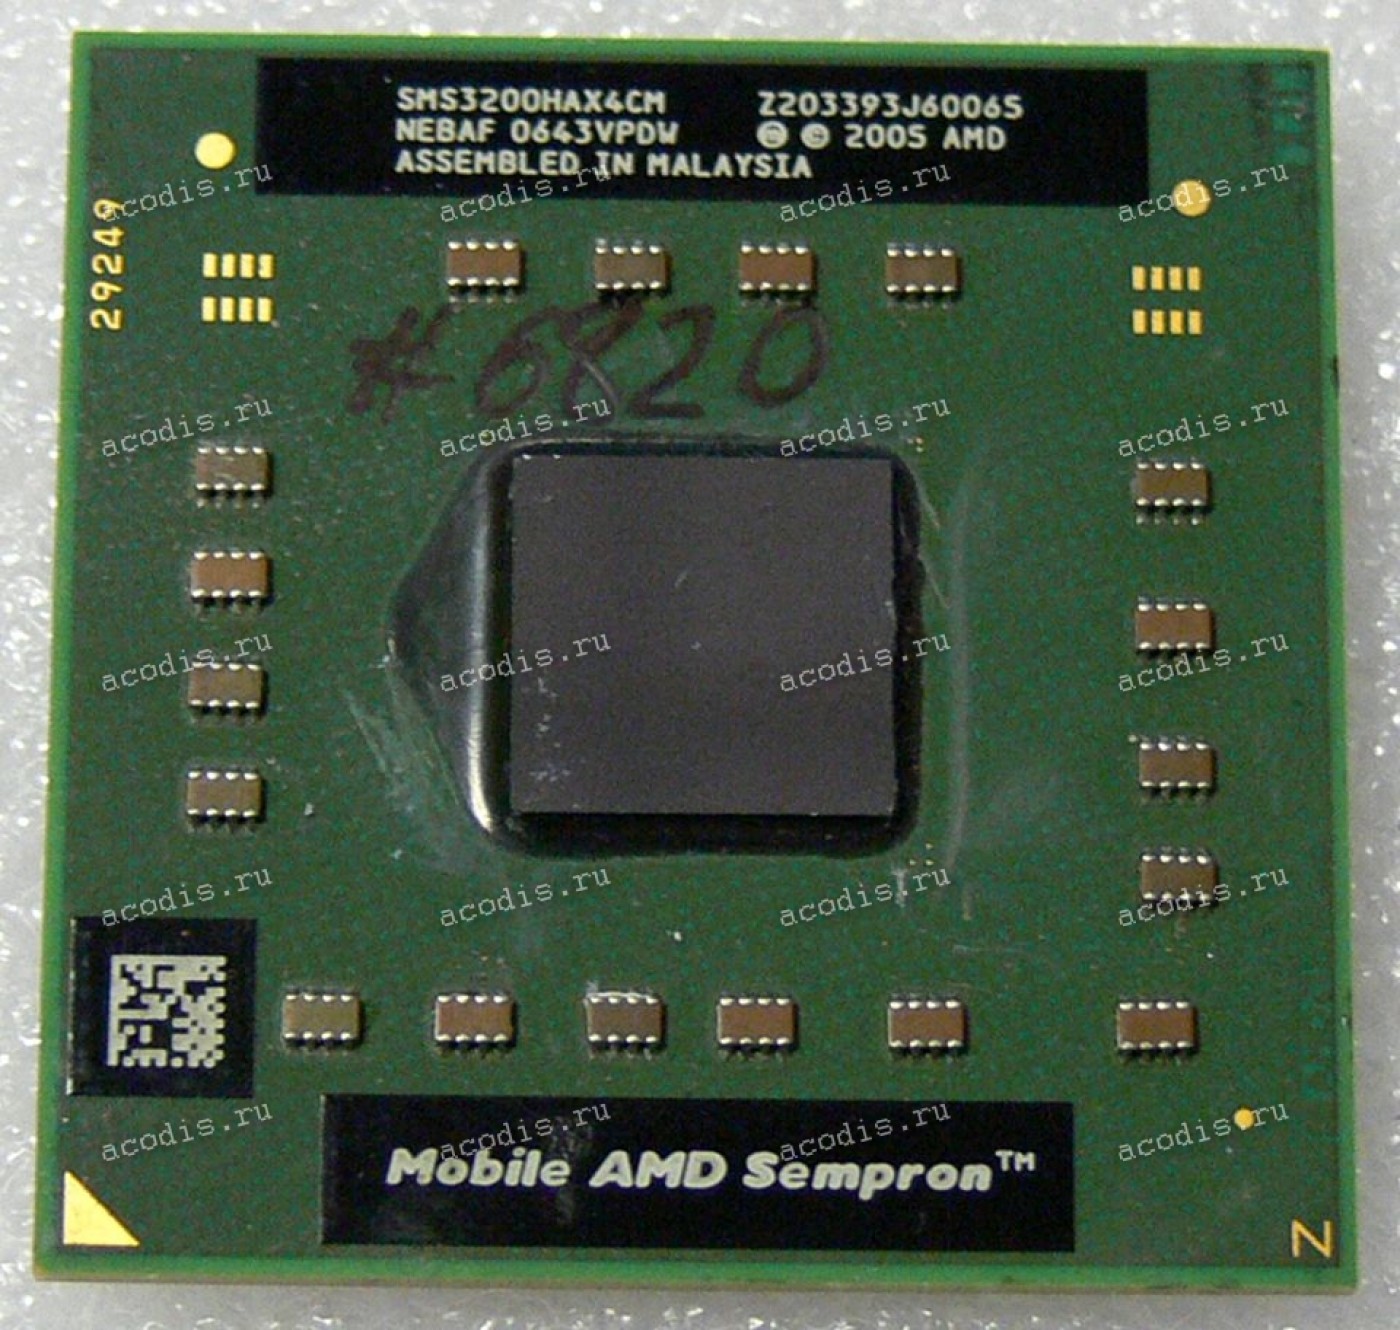 Сокет s1. Сокет s1g4. Mobile AMD Sempron sms3200hax4cm. AMD Sempron 3200+. AMD Turion 540 Socket s1 638.